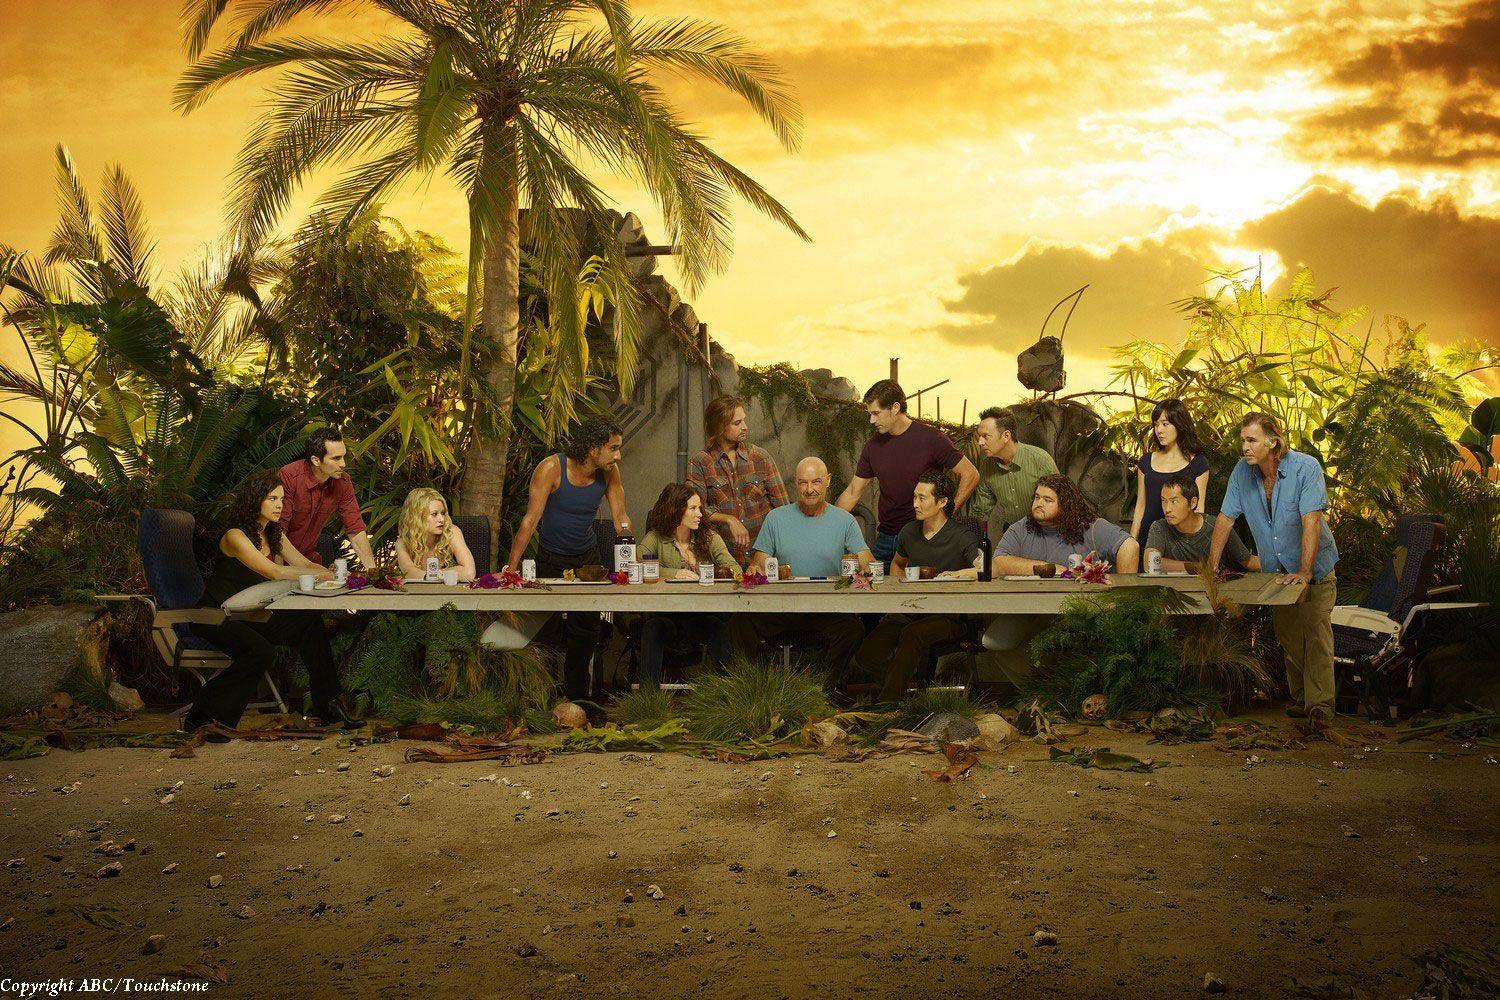 LOST Copies BSG w/ “The Last Supper” Promo Image (PICS). ThinkHero